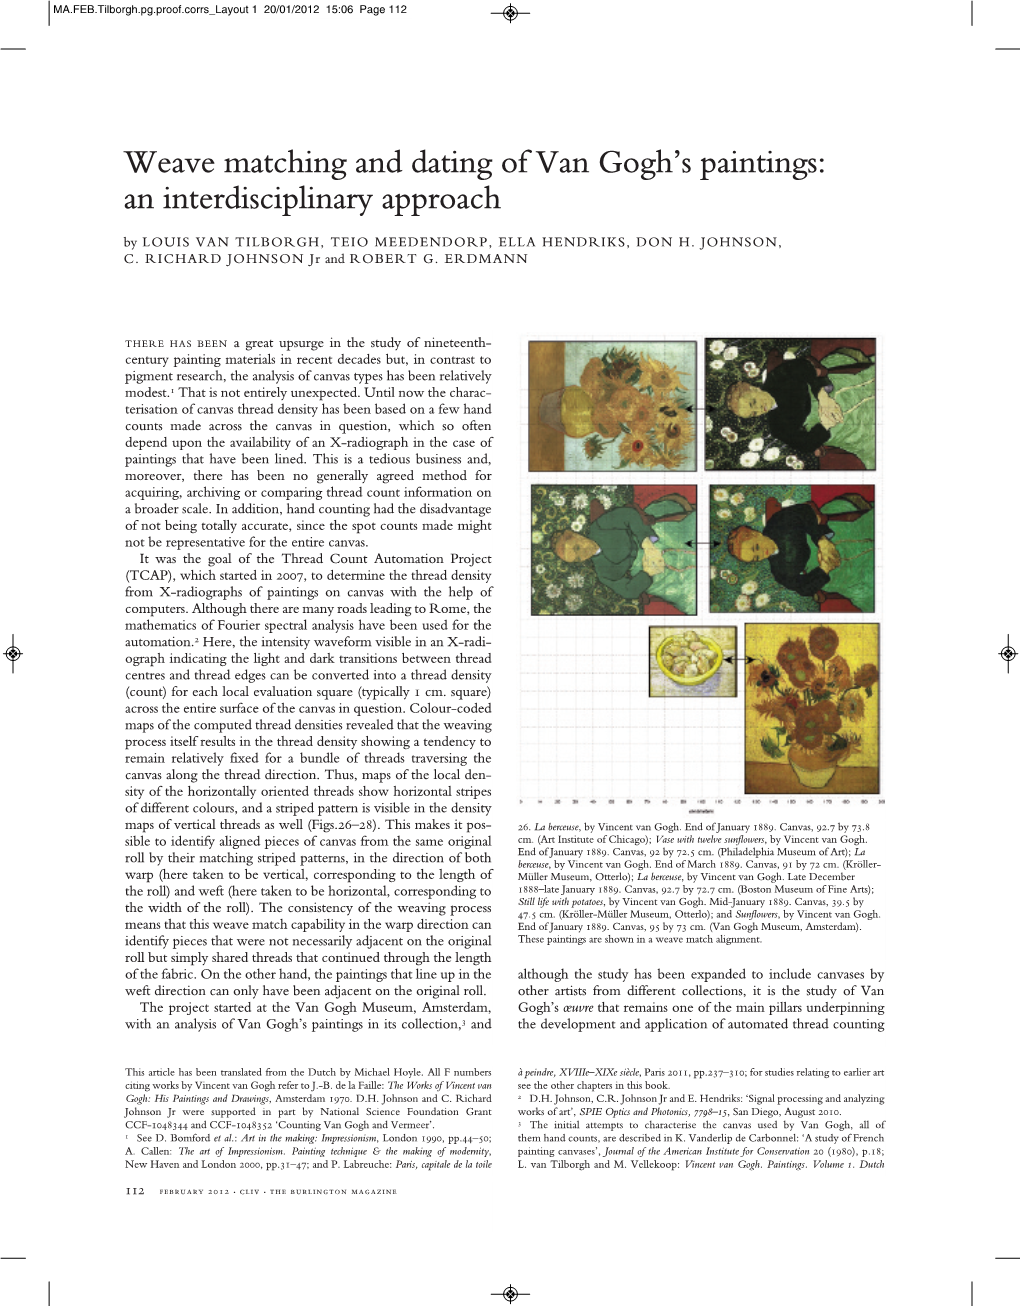 Van Gogh’S Paintings: an Interdisciplinary Approach